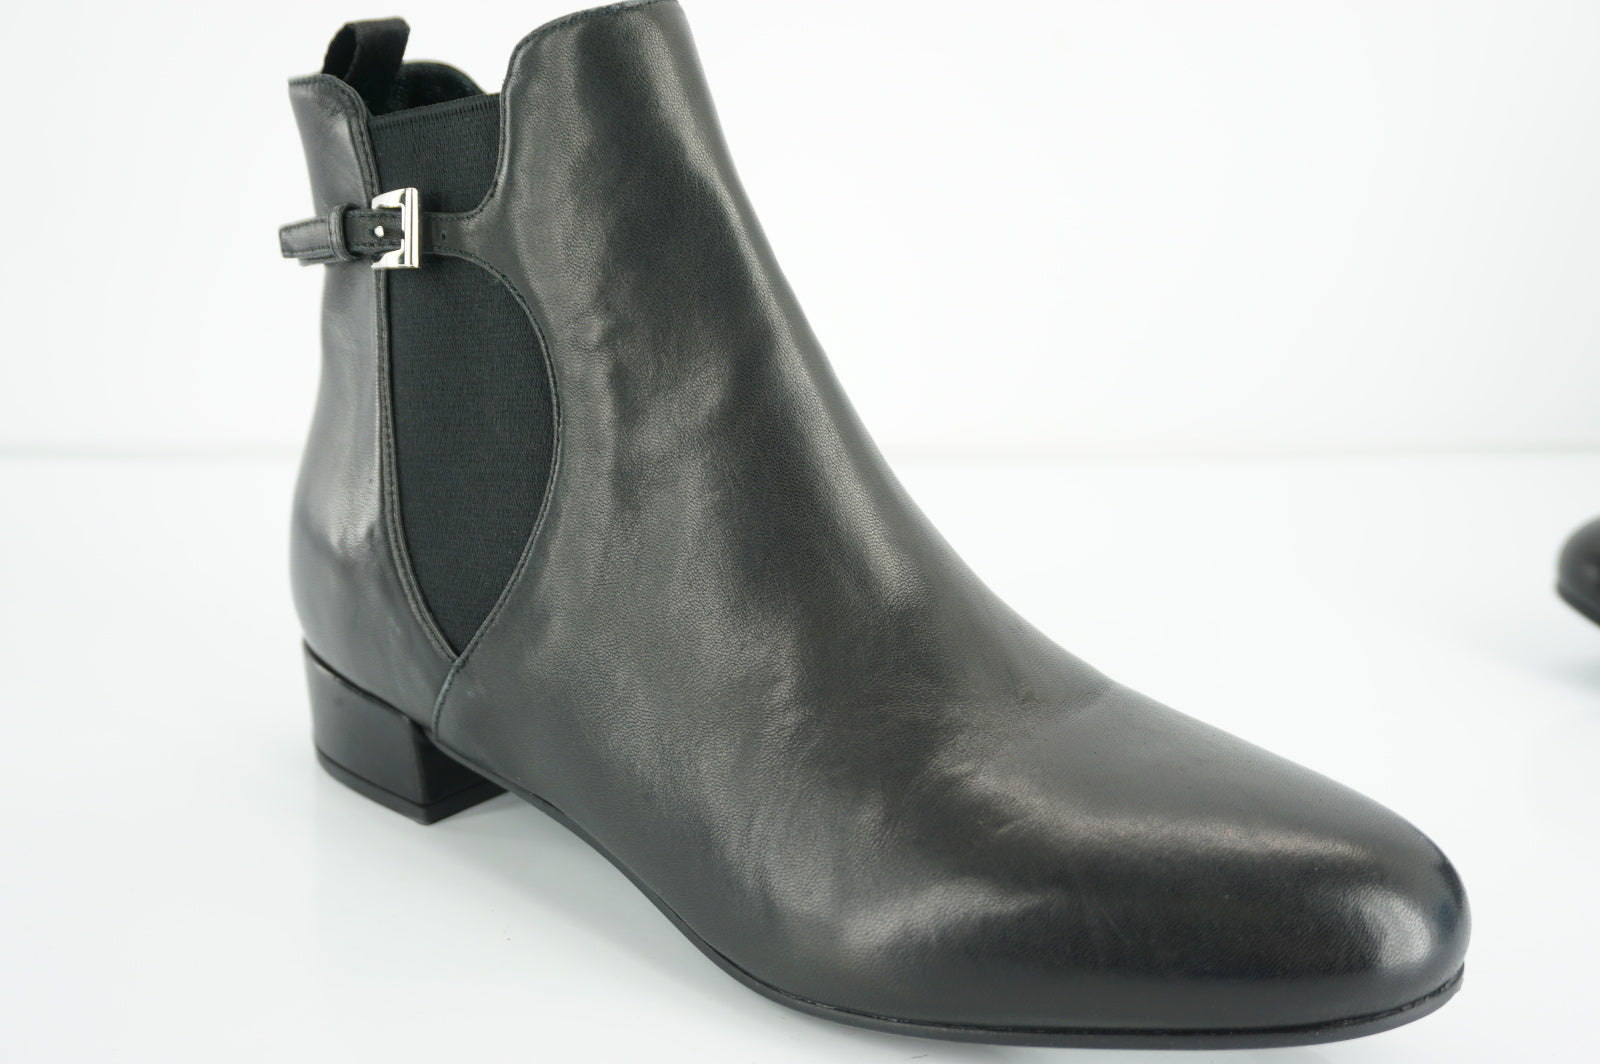 Prada Buckle Chelsea Short Ankle Boots Size 37 Mid Block heels $820 NIB